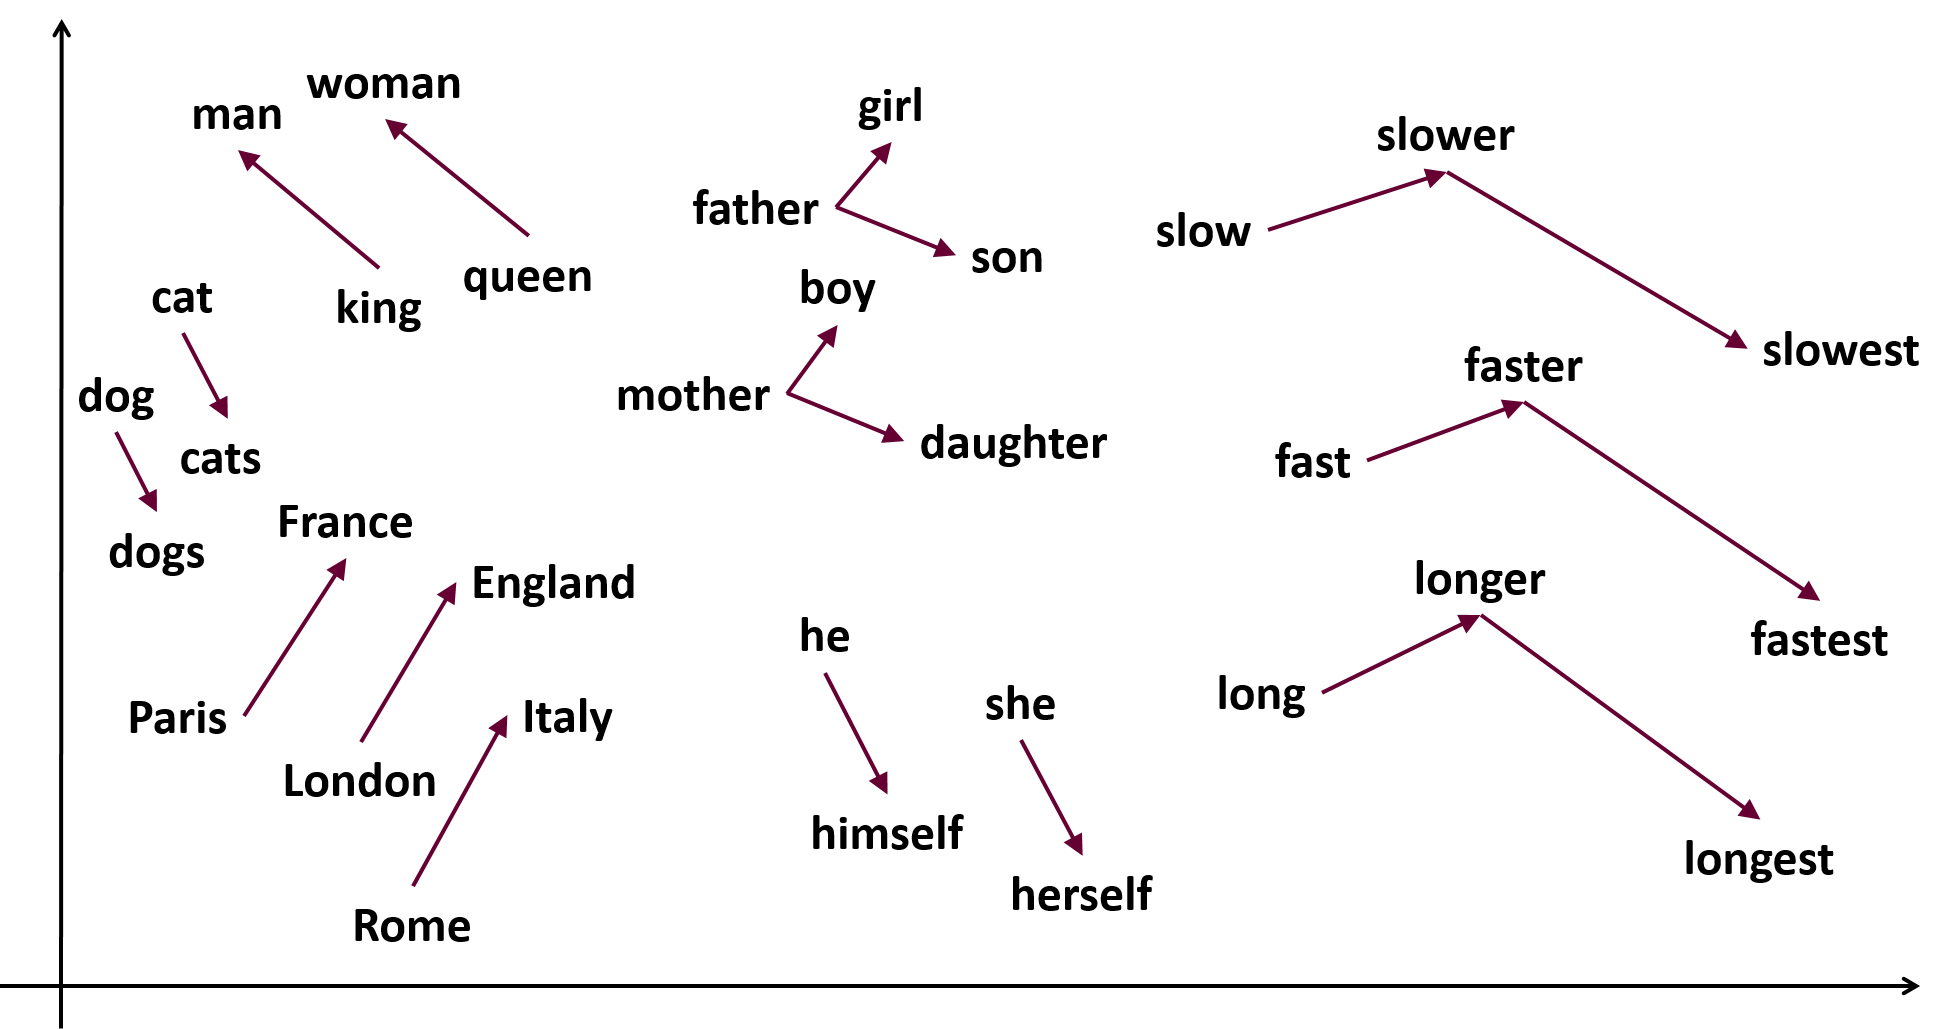 A 2-dimensional representation of word2vec.